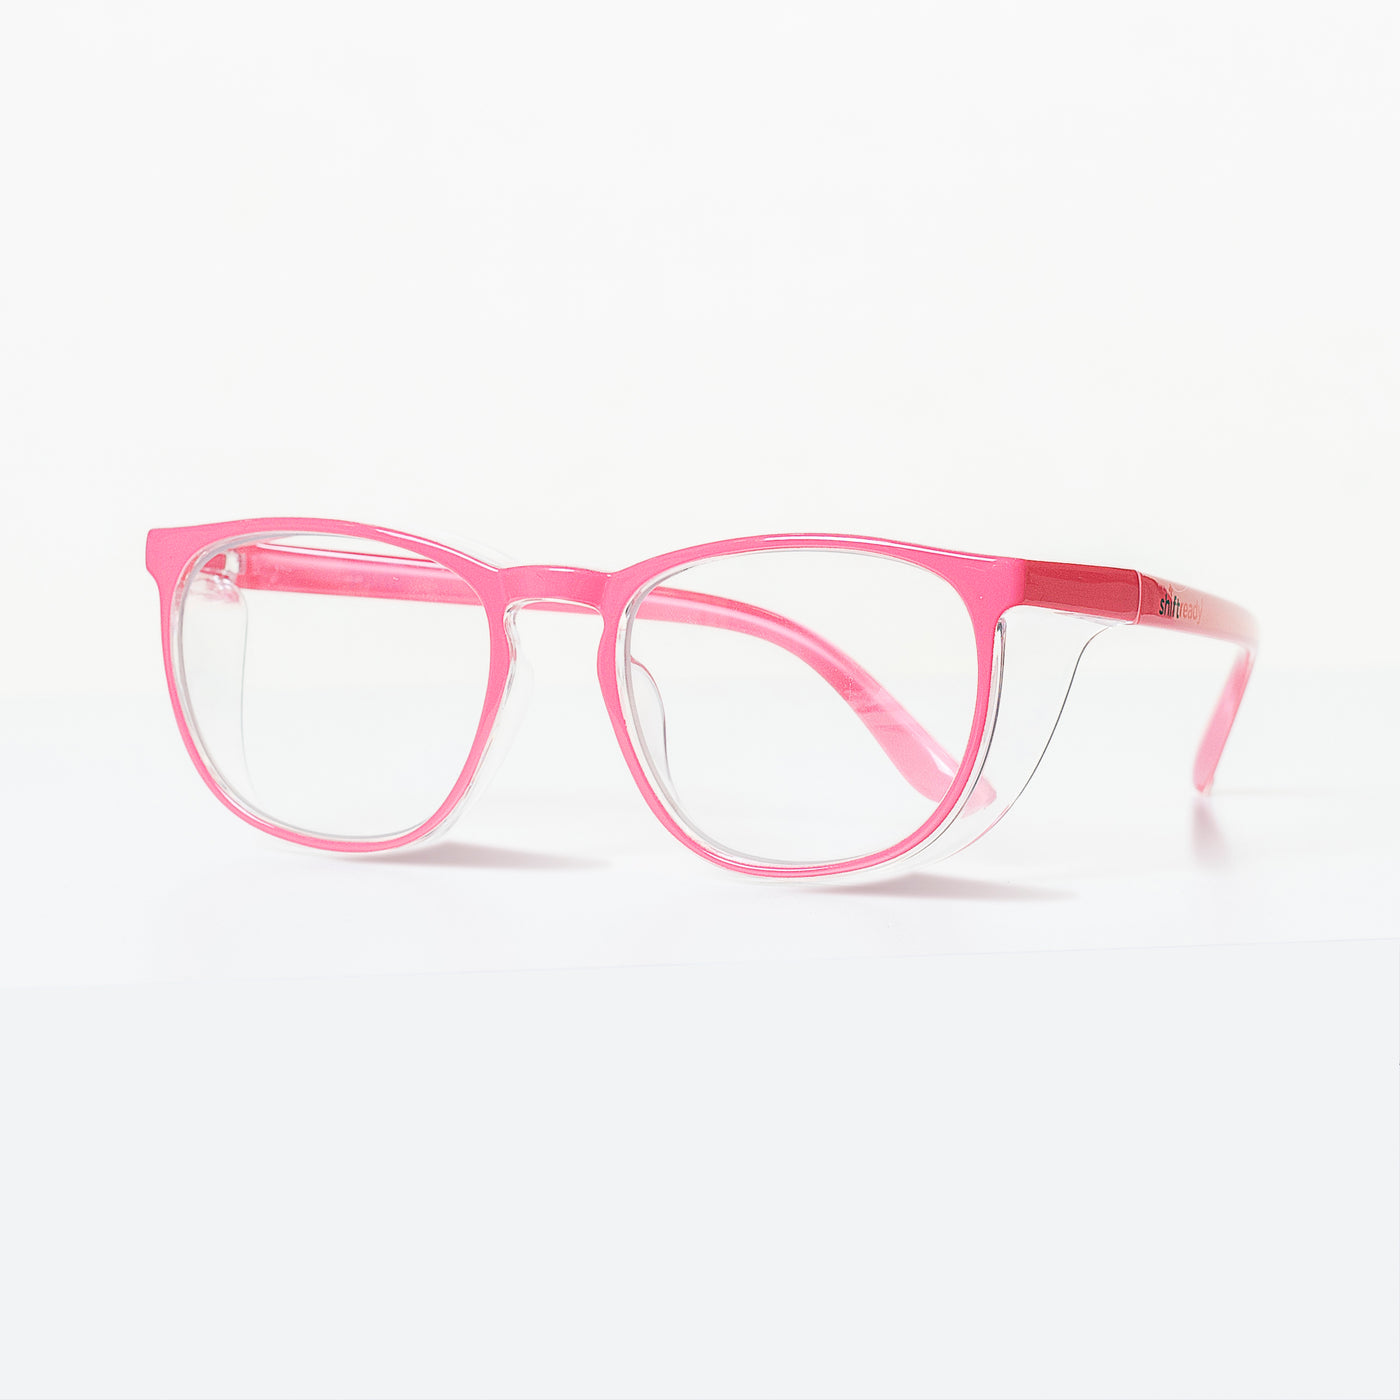 Shift Ready - Anti-fog Safety Glasses - Pink